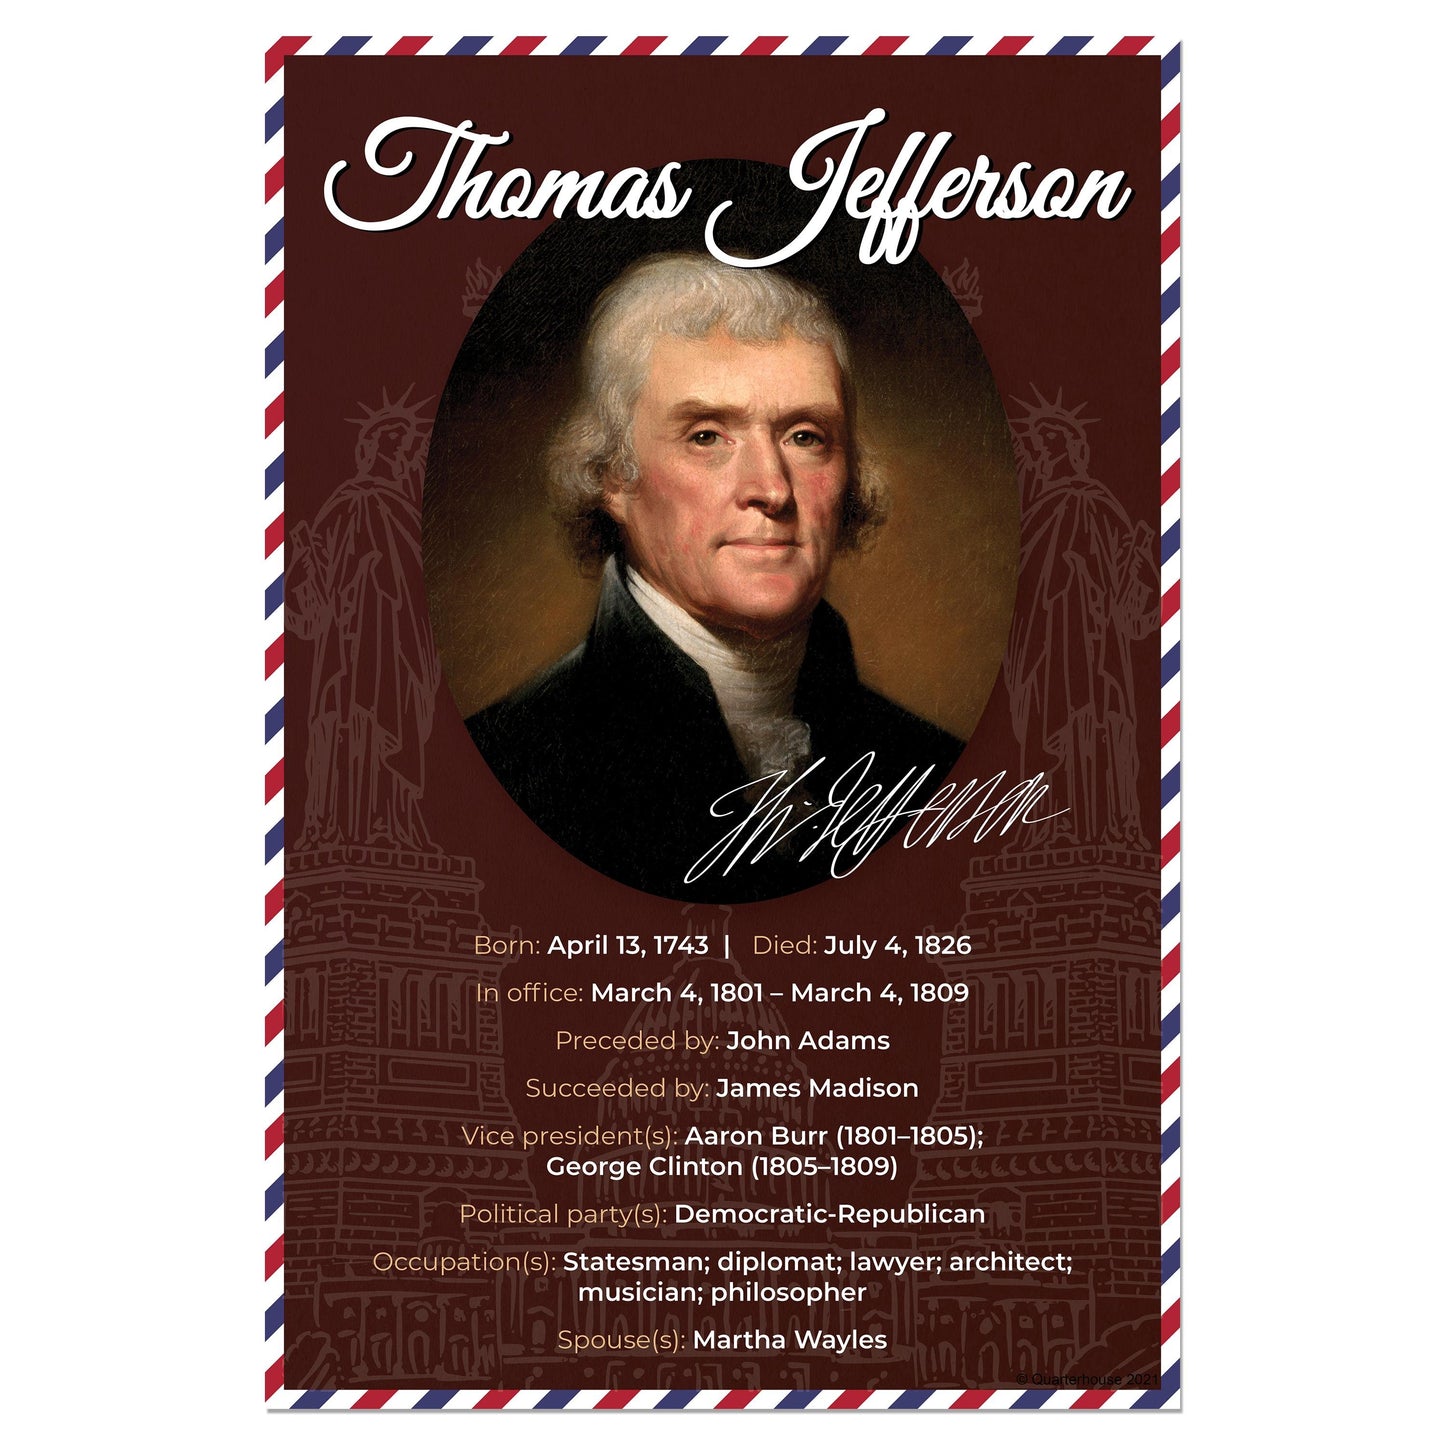 Quarterhouse President Thomas Jefferson Biographical Poster, Social Studies Classroom Materials for Teachers